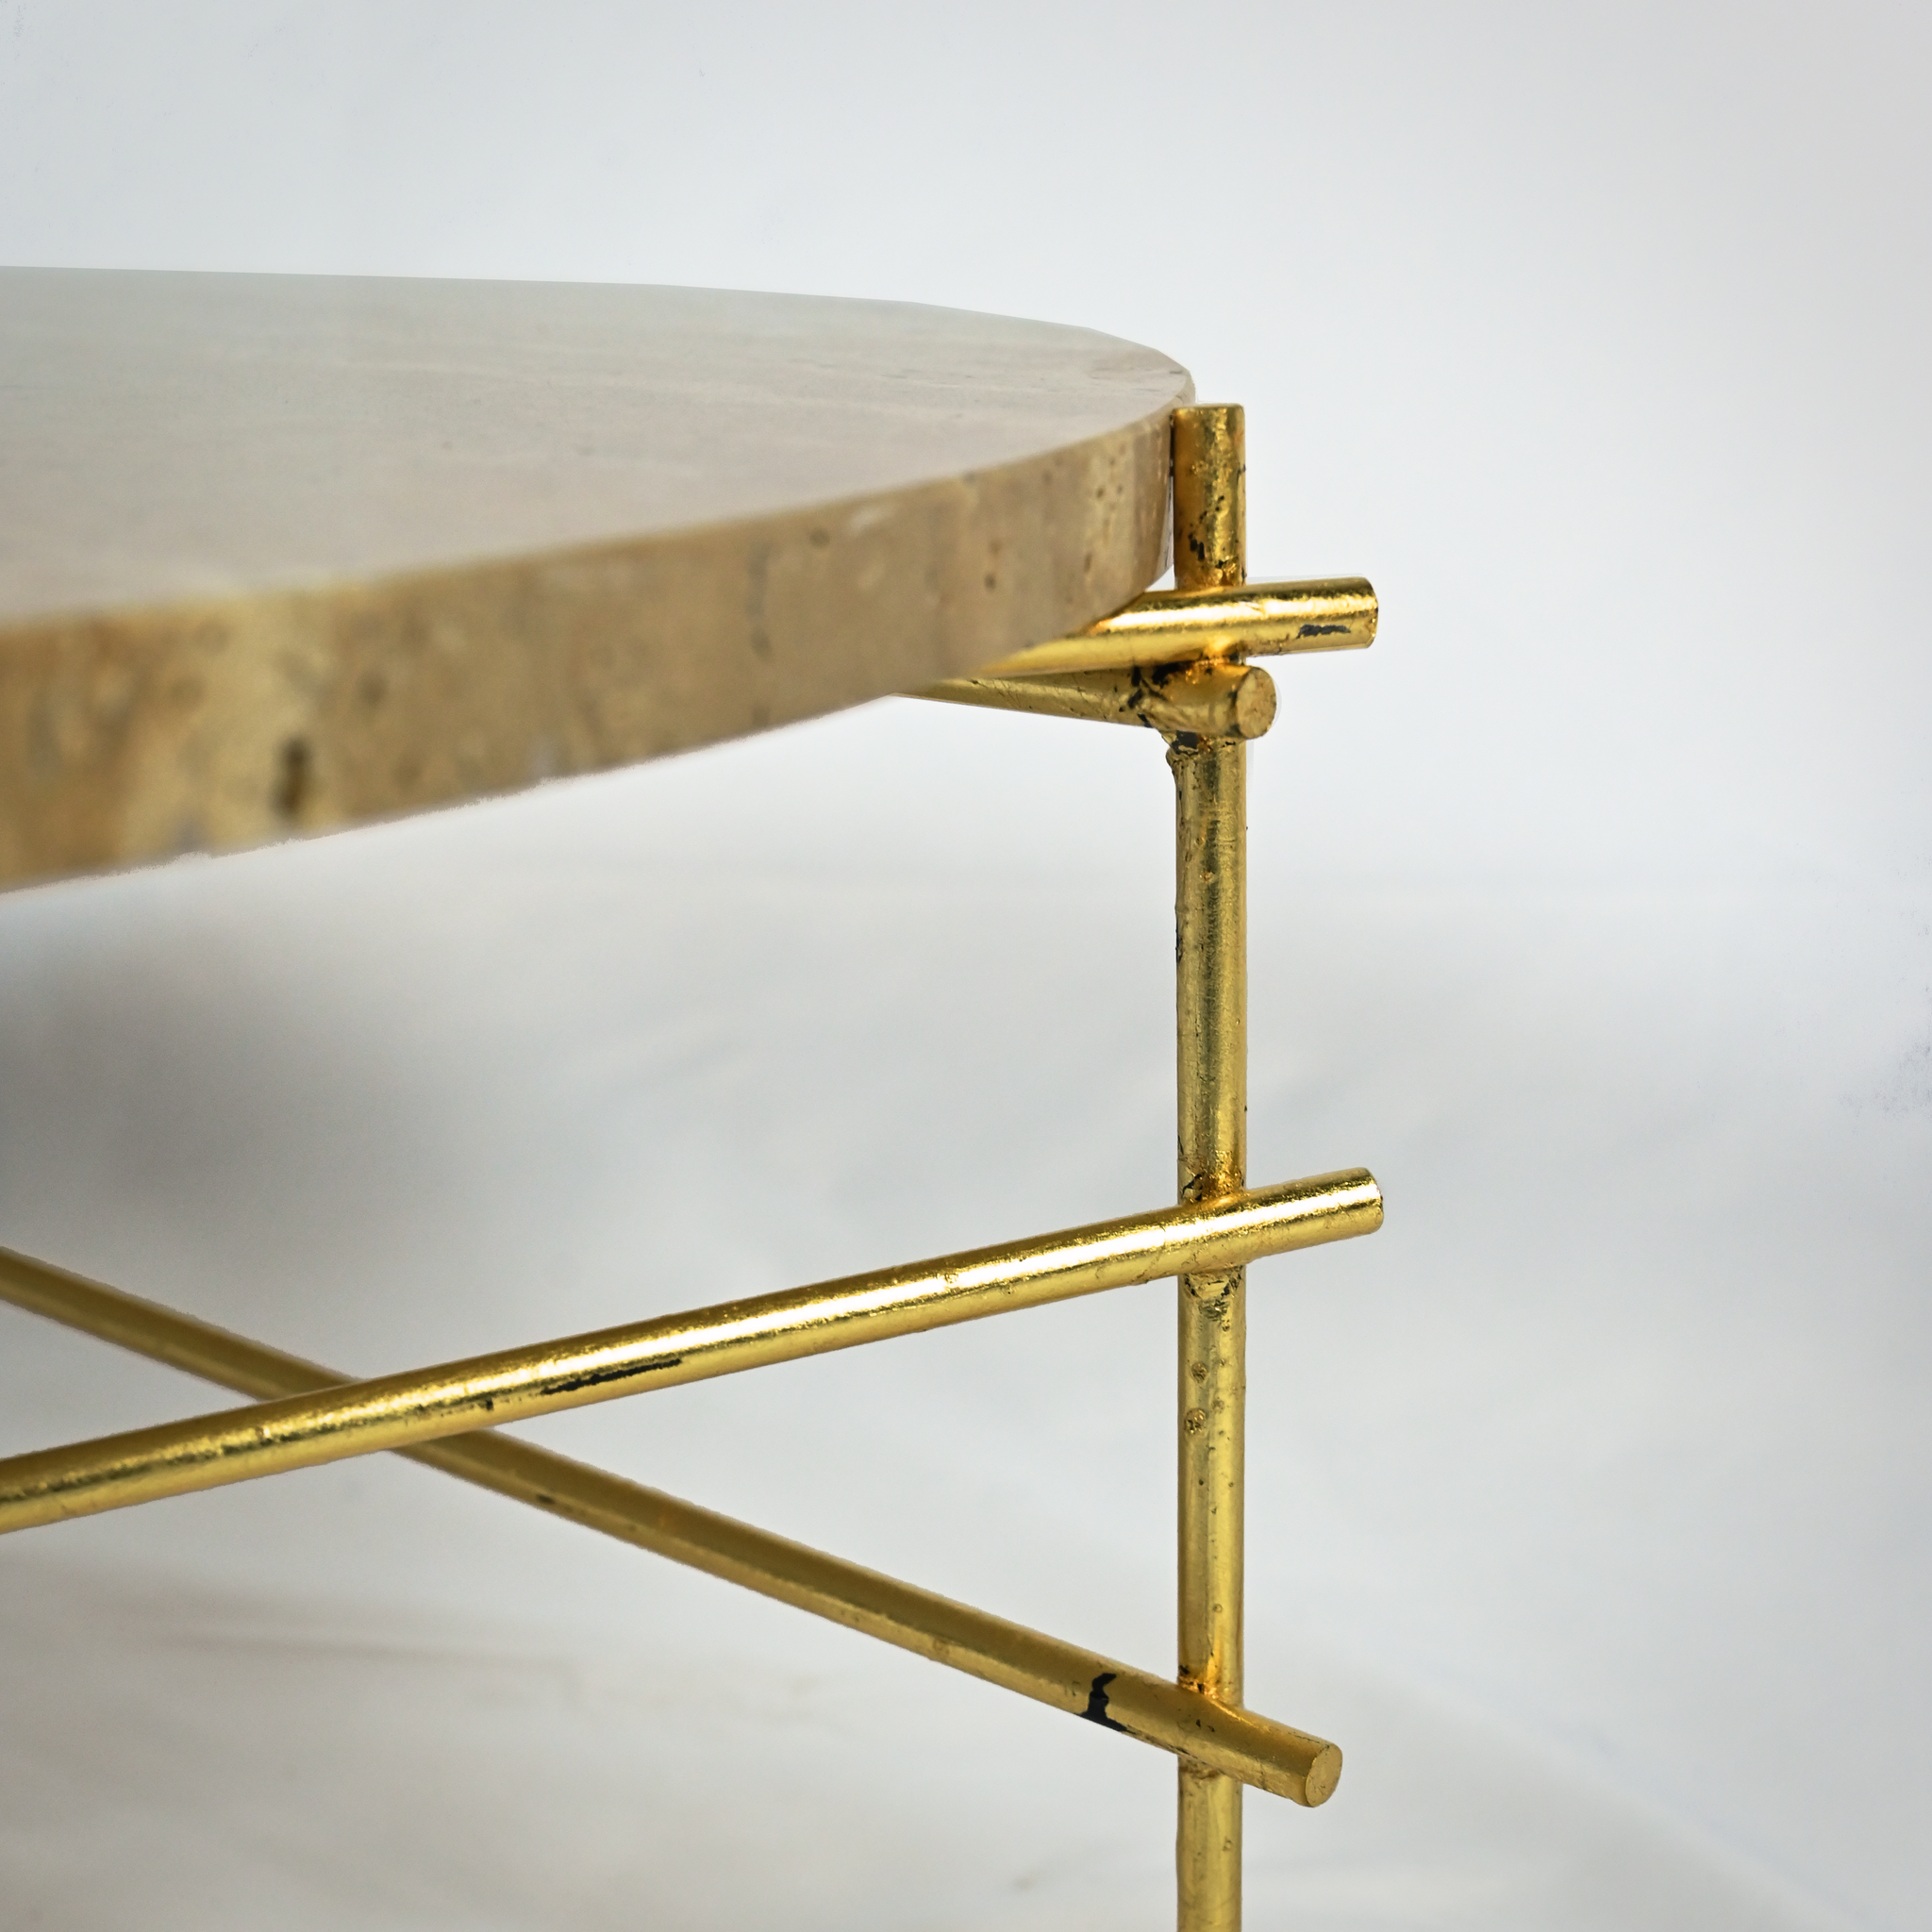 The Stilts - Travertine coffee table